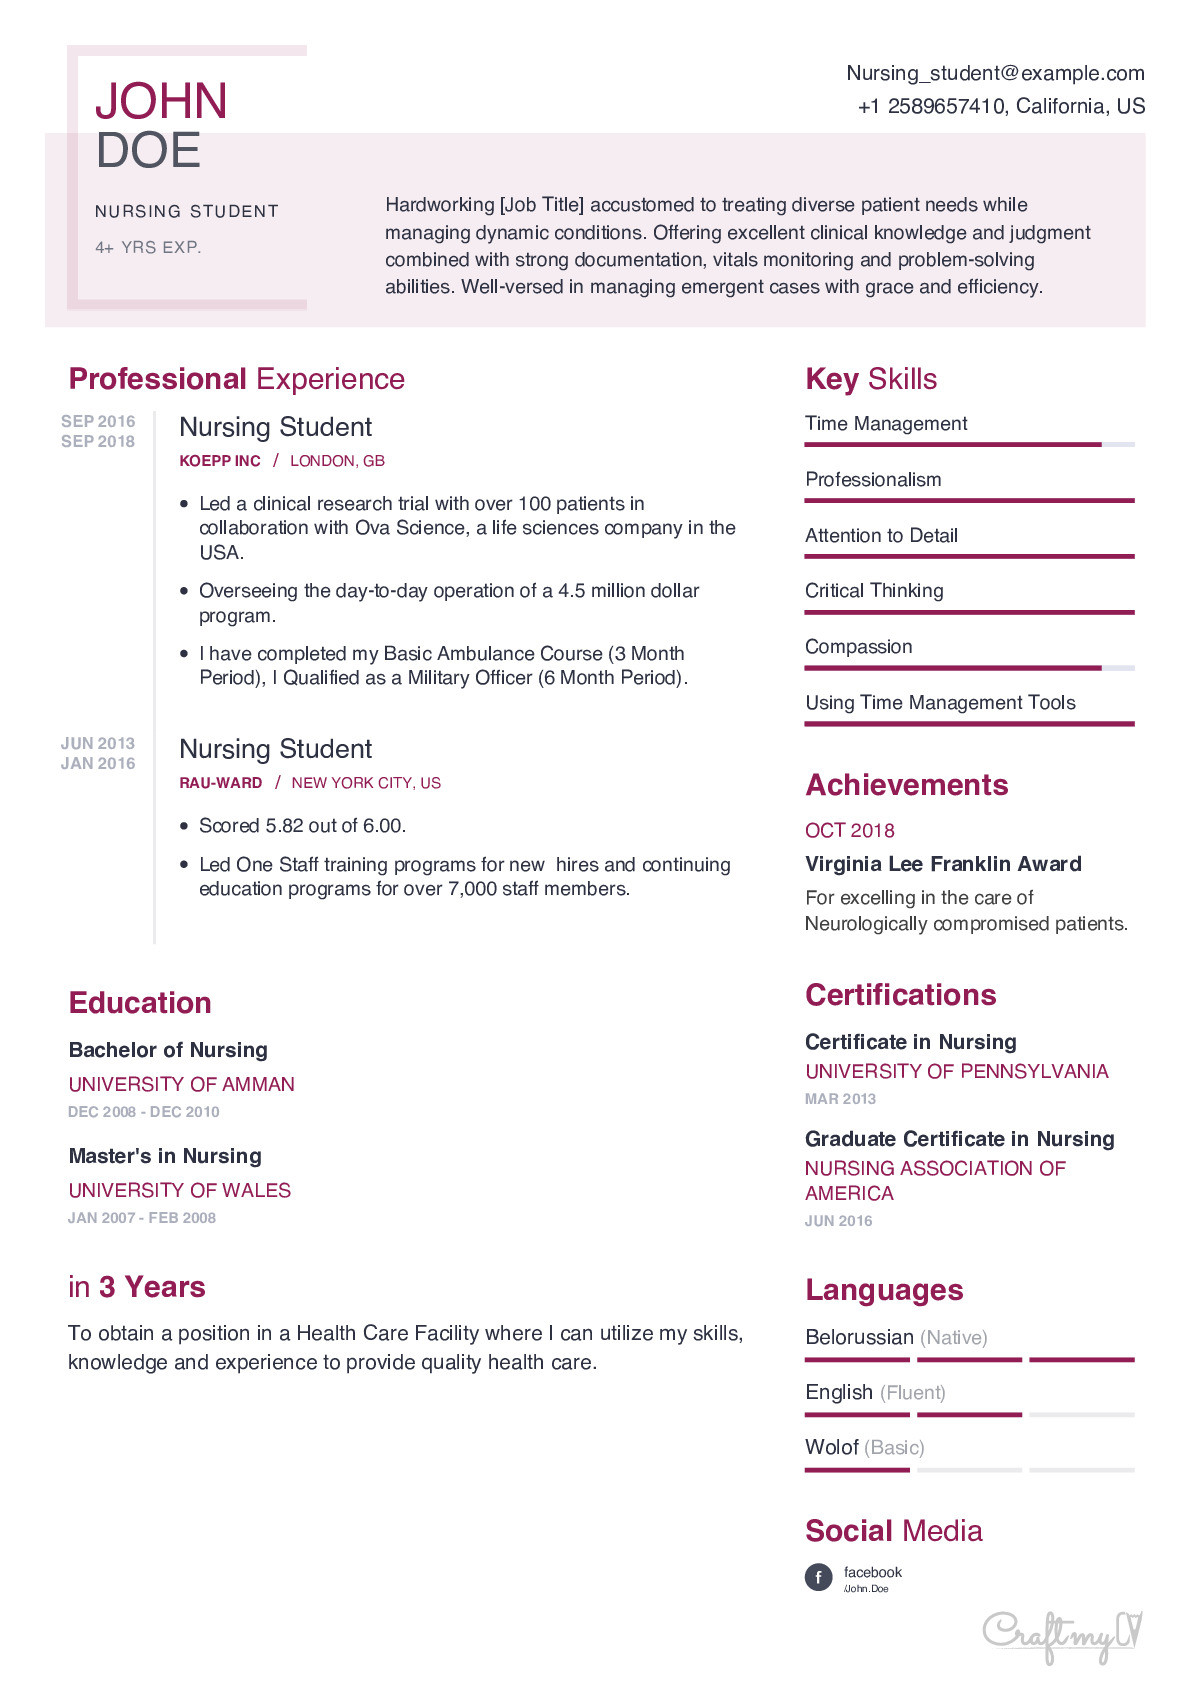 Sample Resume for Undergraduate Nursing Student Nursing Student Resume Example with Content Sample Craftmycv